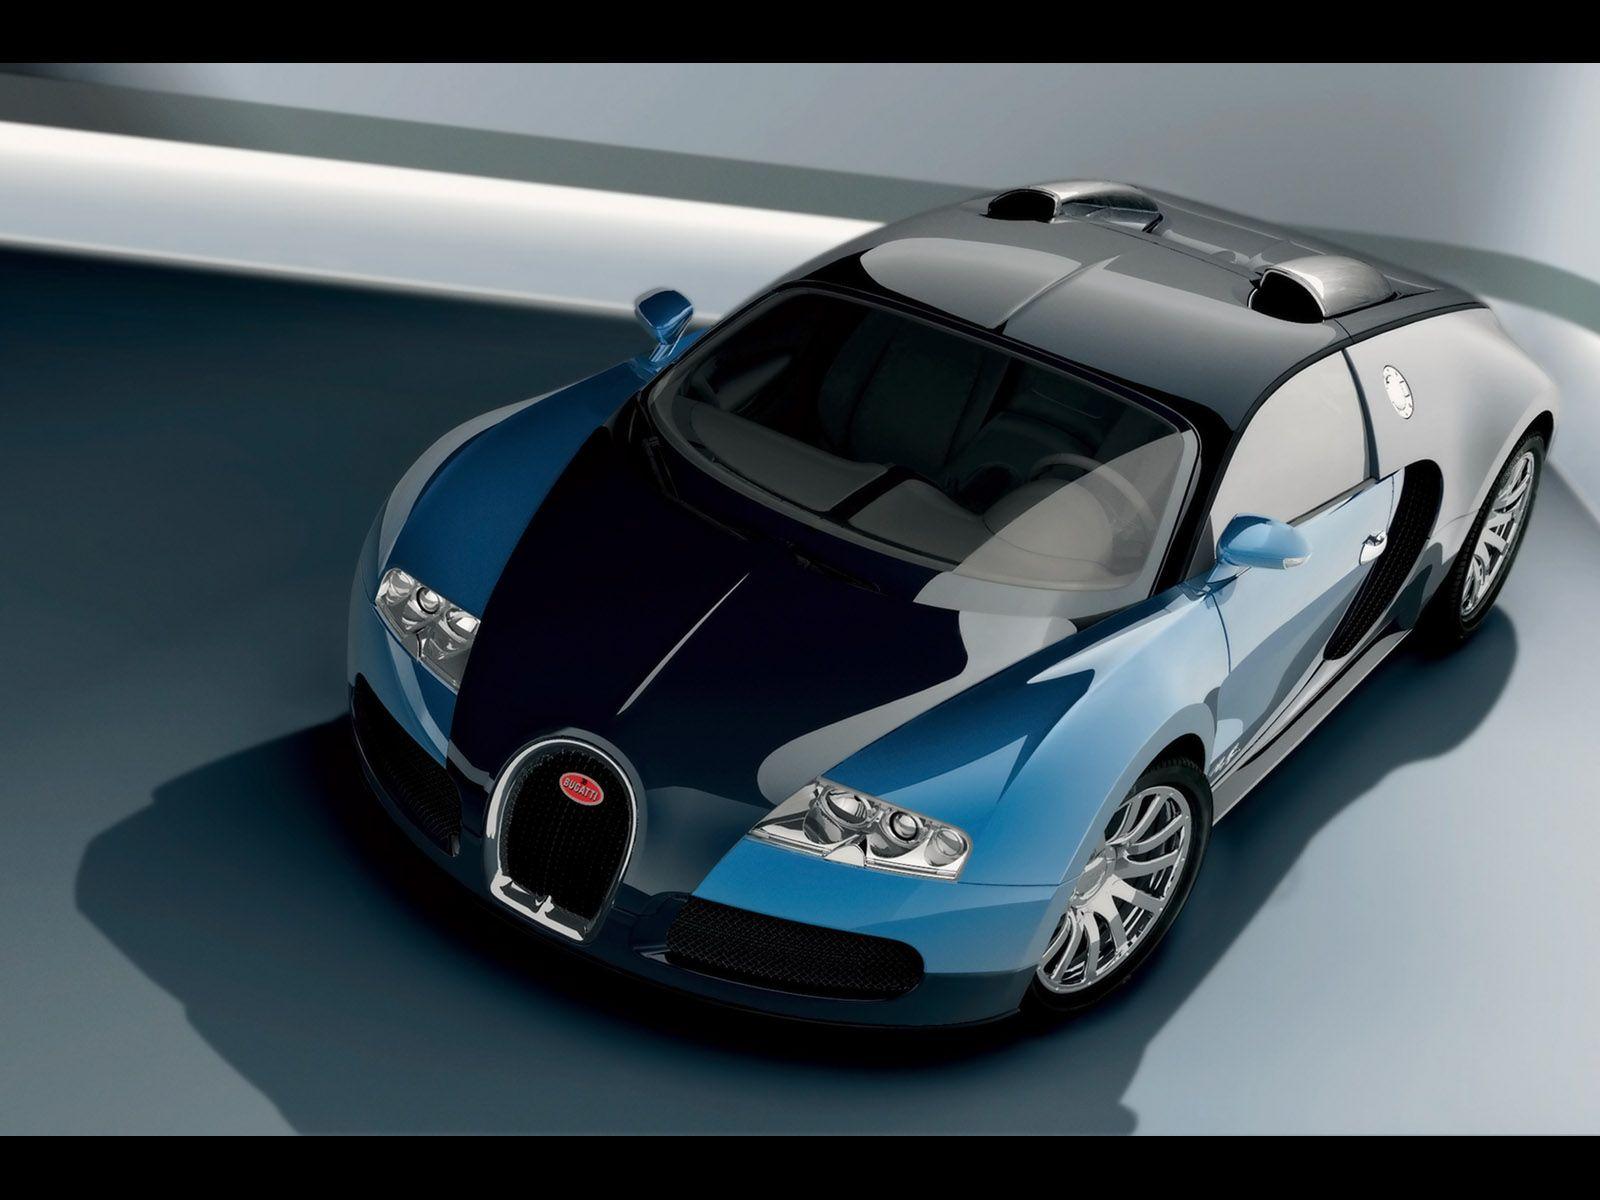 Bugatti Veyron Windows 7 Cars Desktop Wallpaper. Car Wallpaper